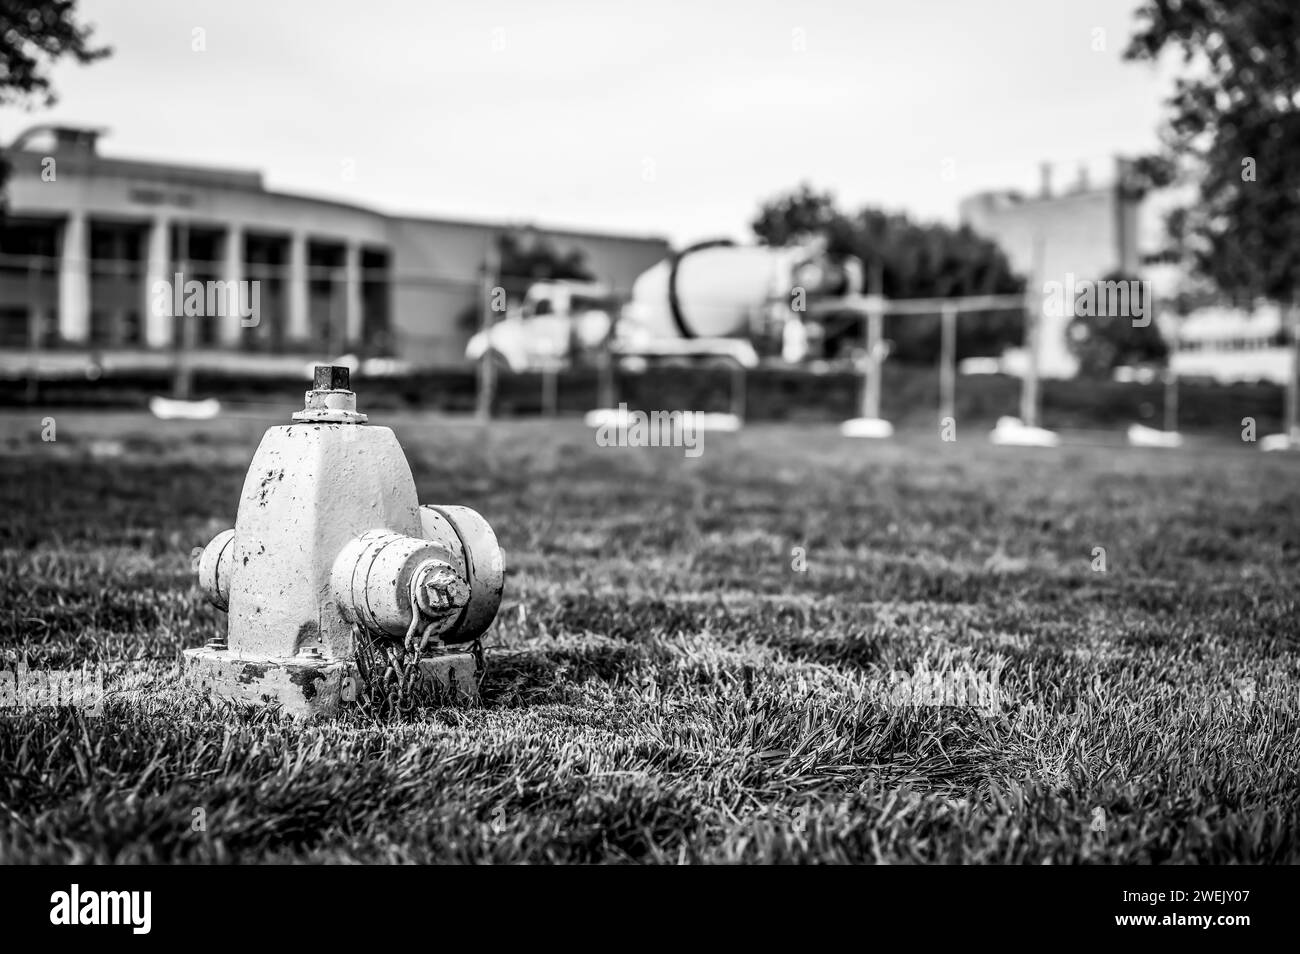 Sunken low level dry barrel fire hydrant in an open grassed area Stock Photo